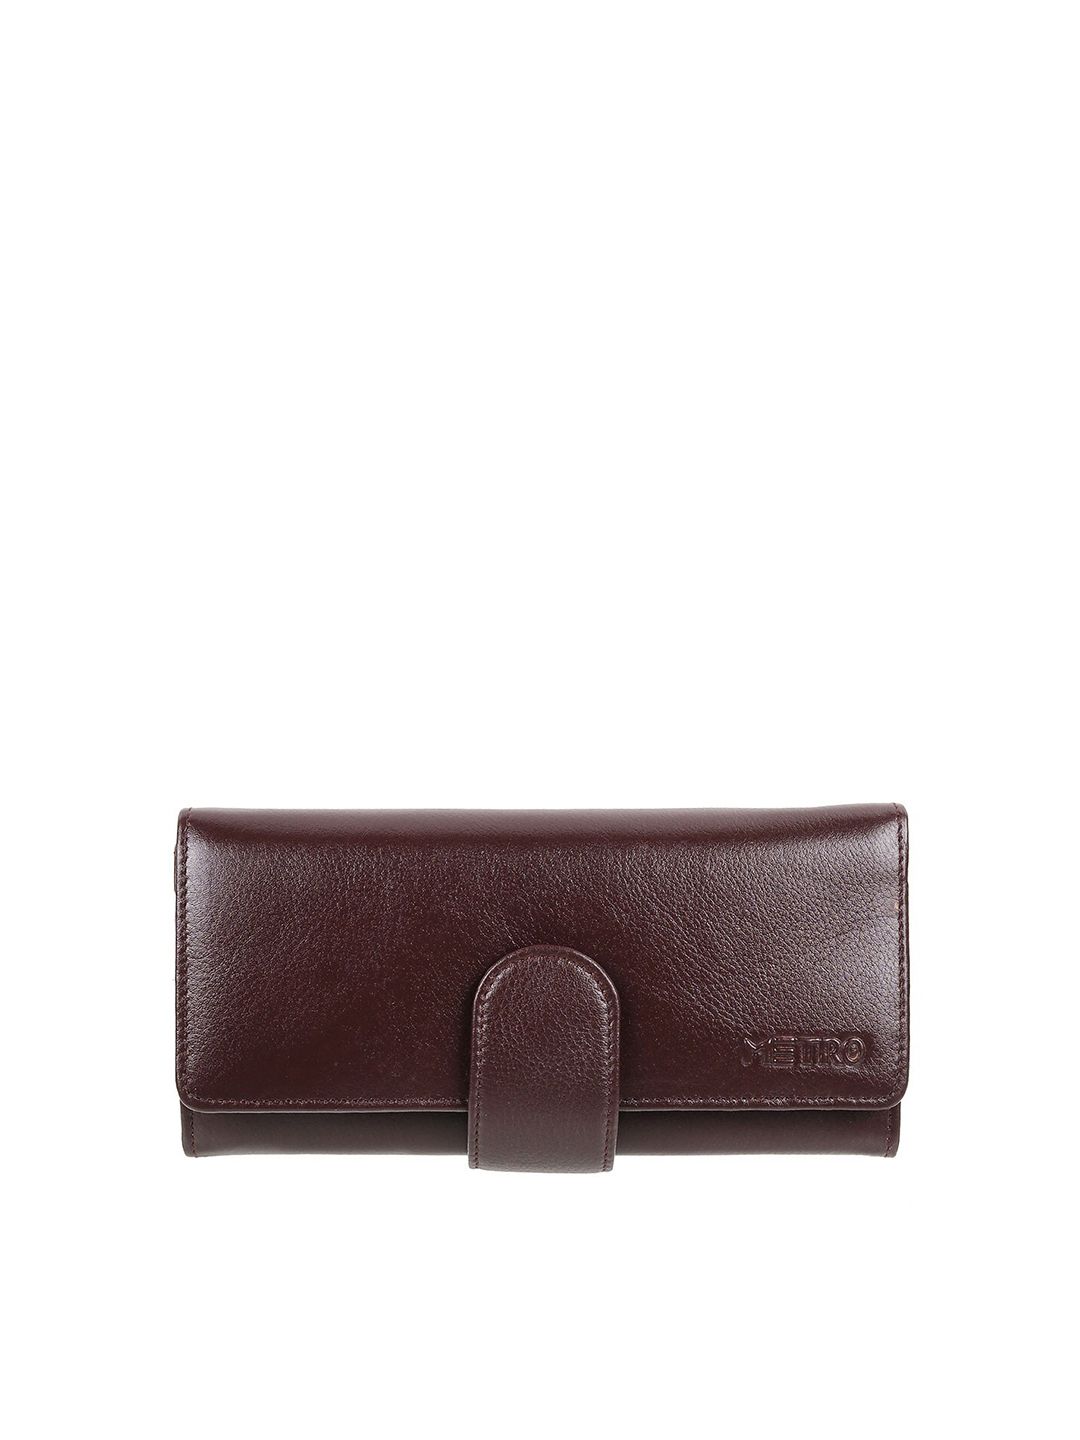 Metro Women Brown Leather Envelope Price in India